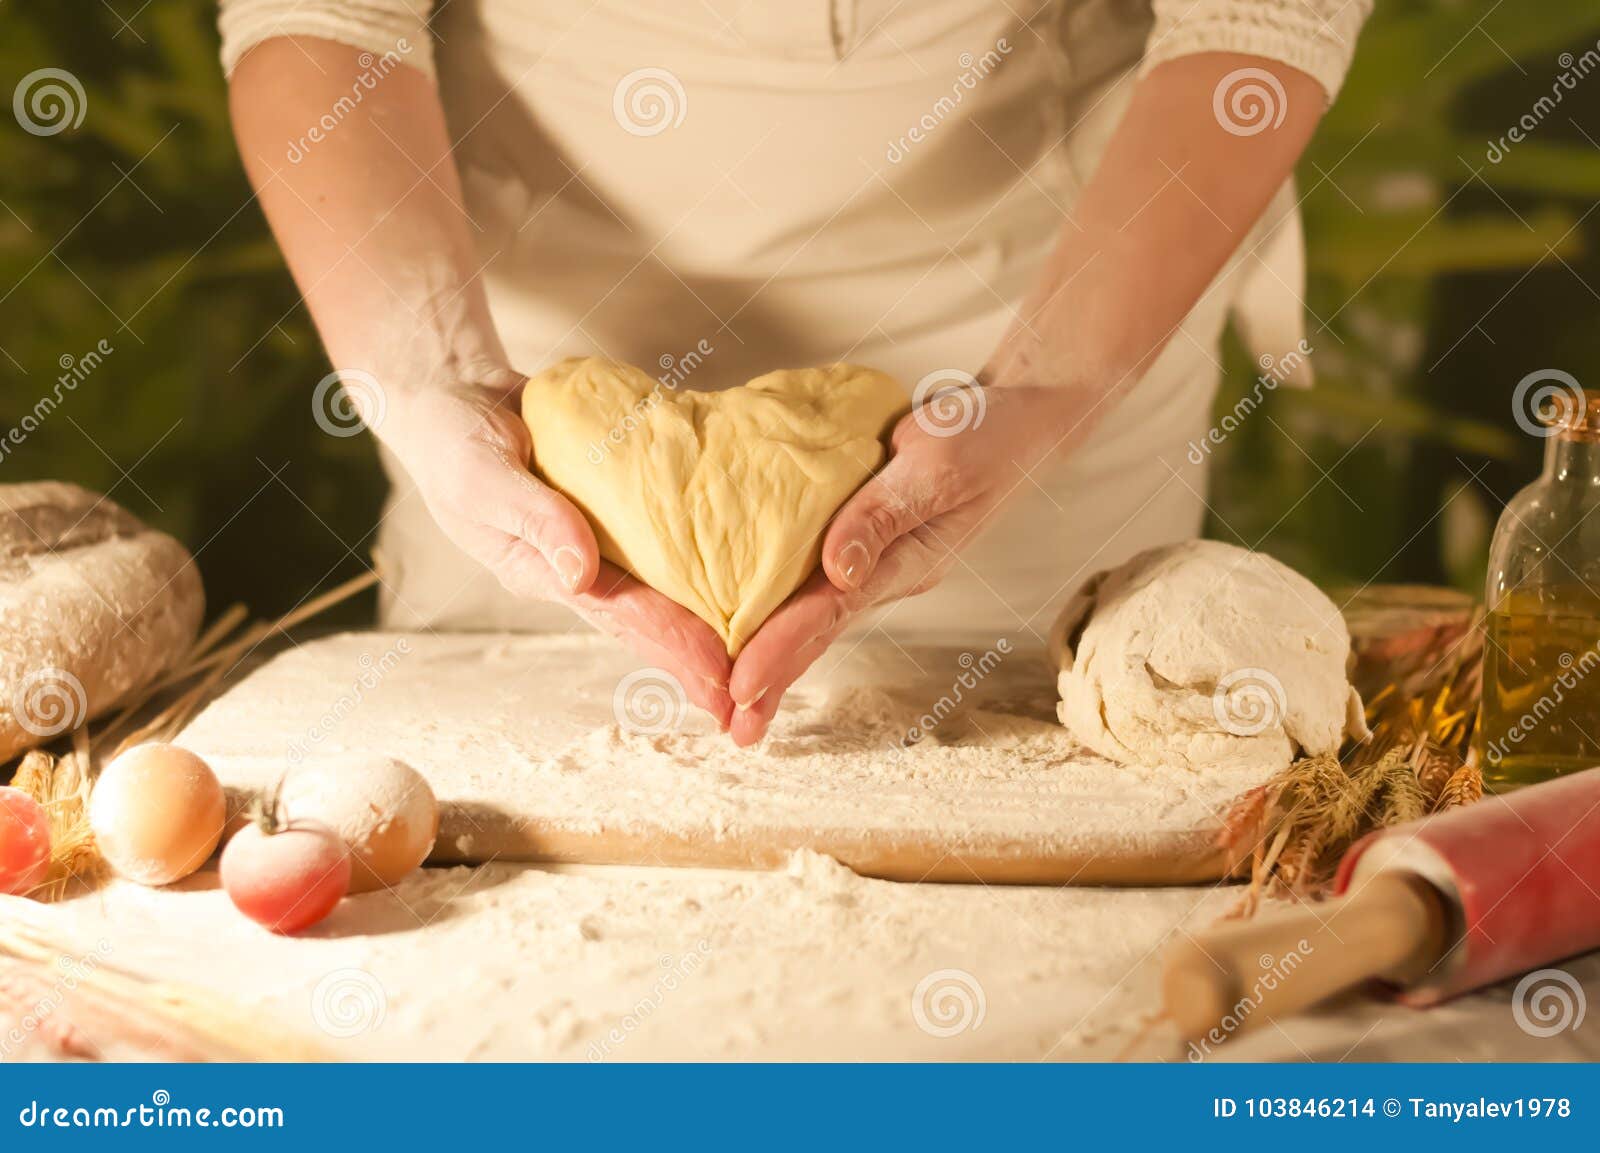 https://thumbs.dreamstime.com/z/women-kneading-dough-making-bread-mixing-preparation-recipe-butter-housework-flour-tasty-pasta-women-baker-hands-recipe-flour-103846214.jpg